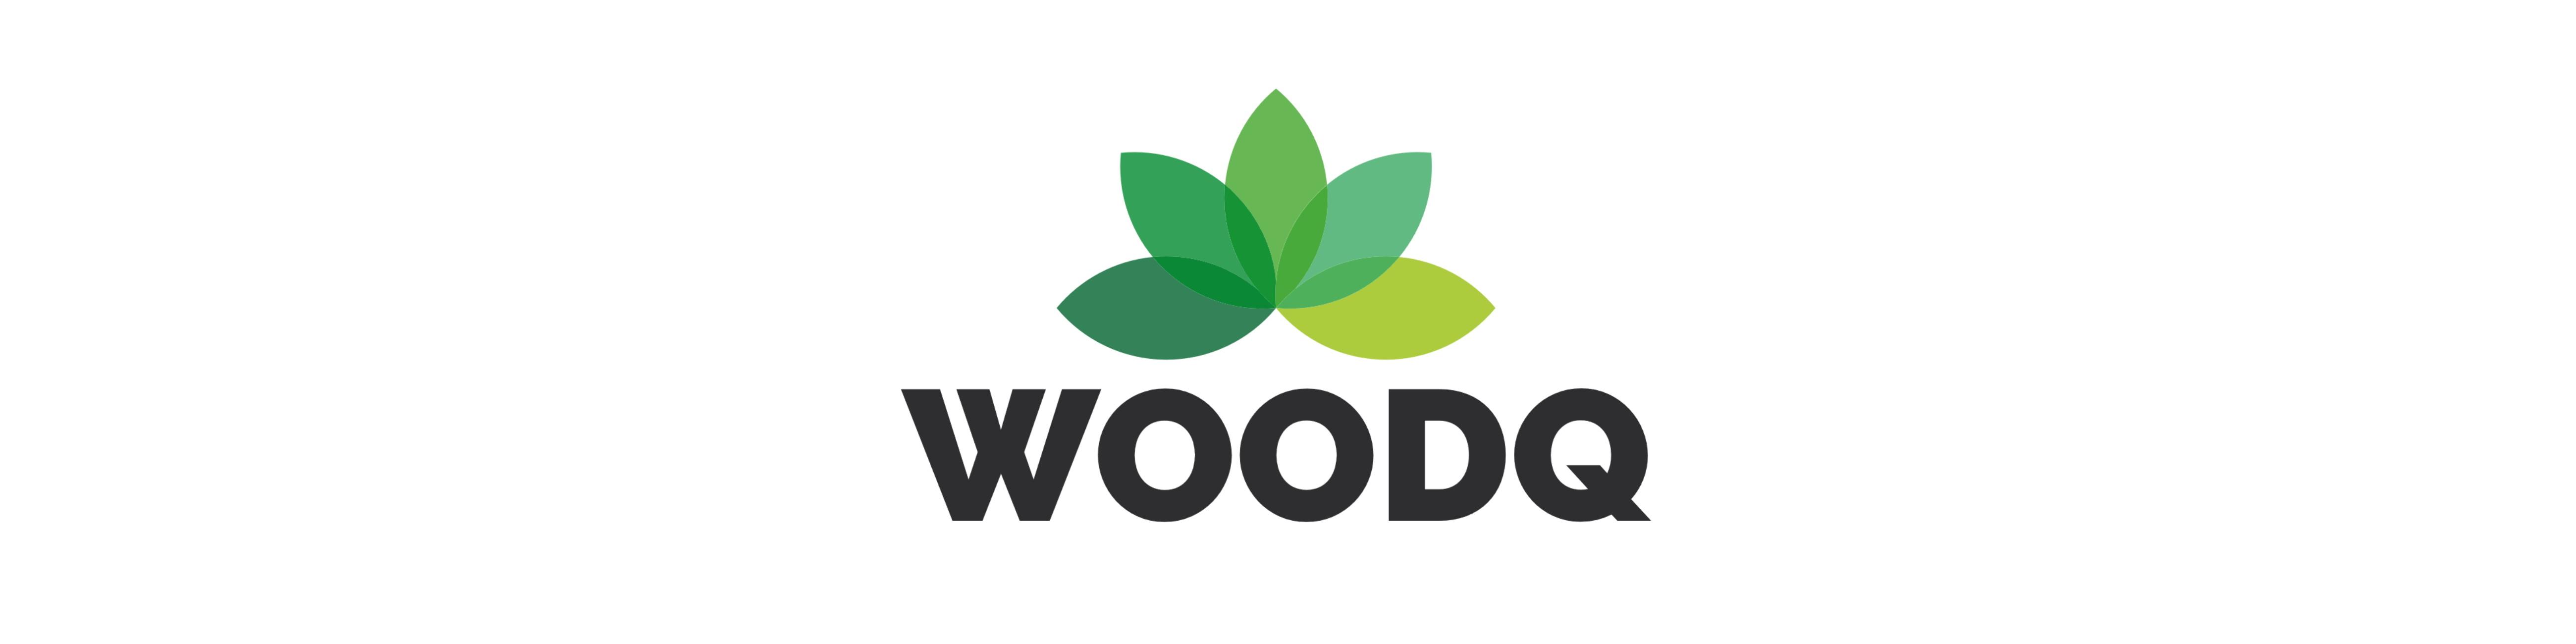 Woodq / startup from Köln / Background